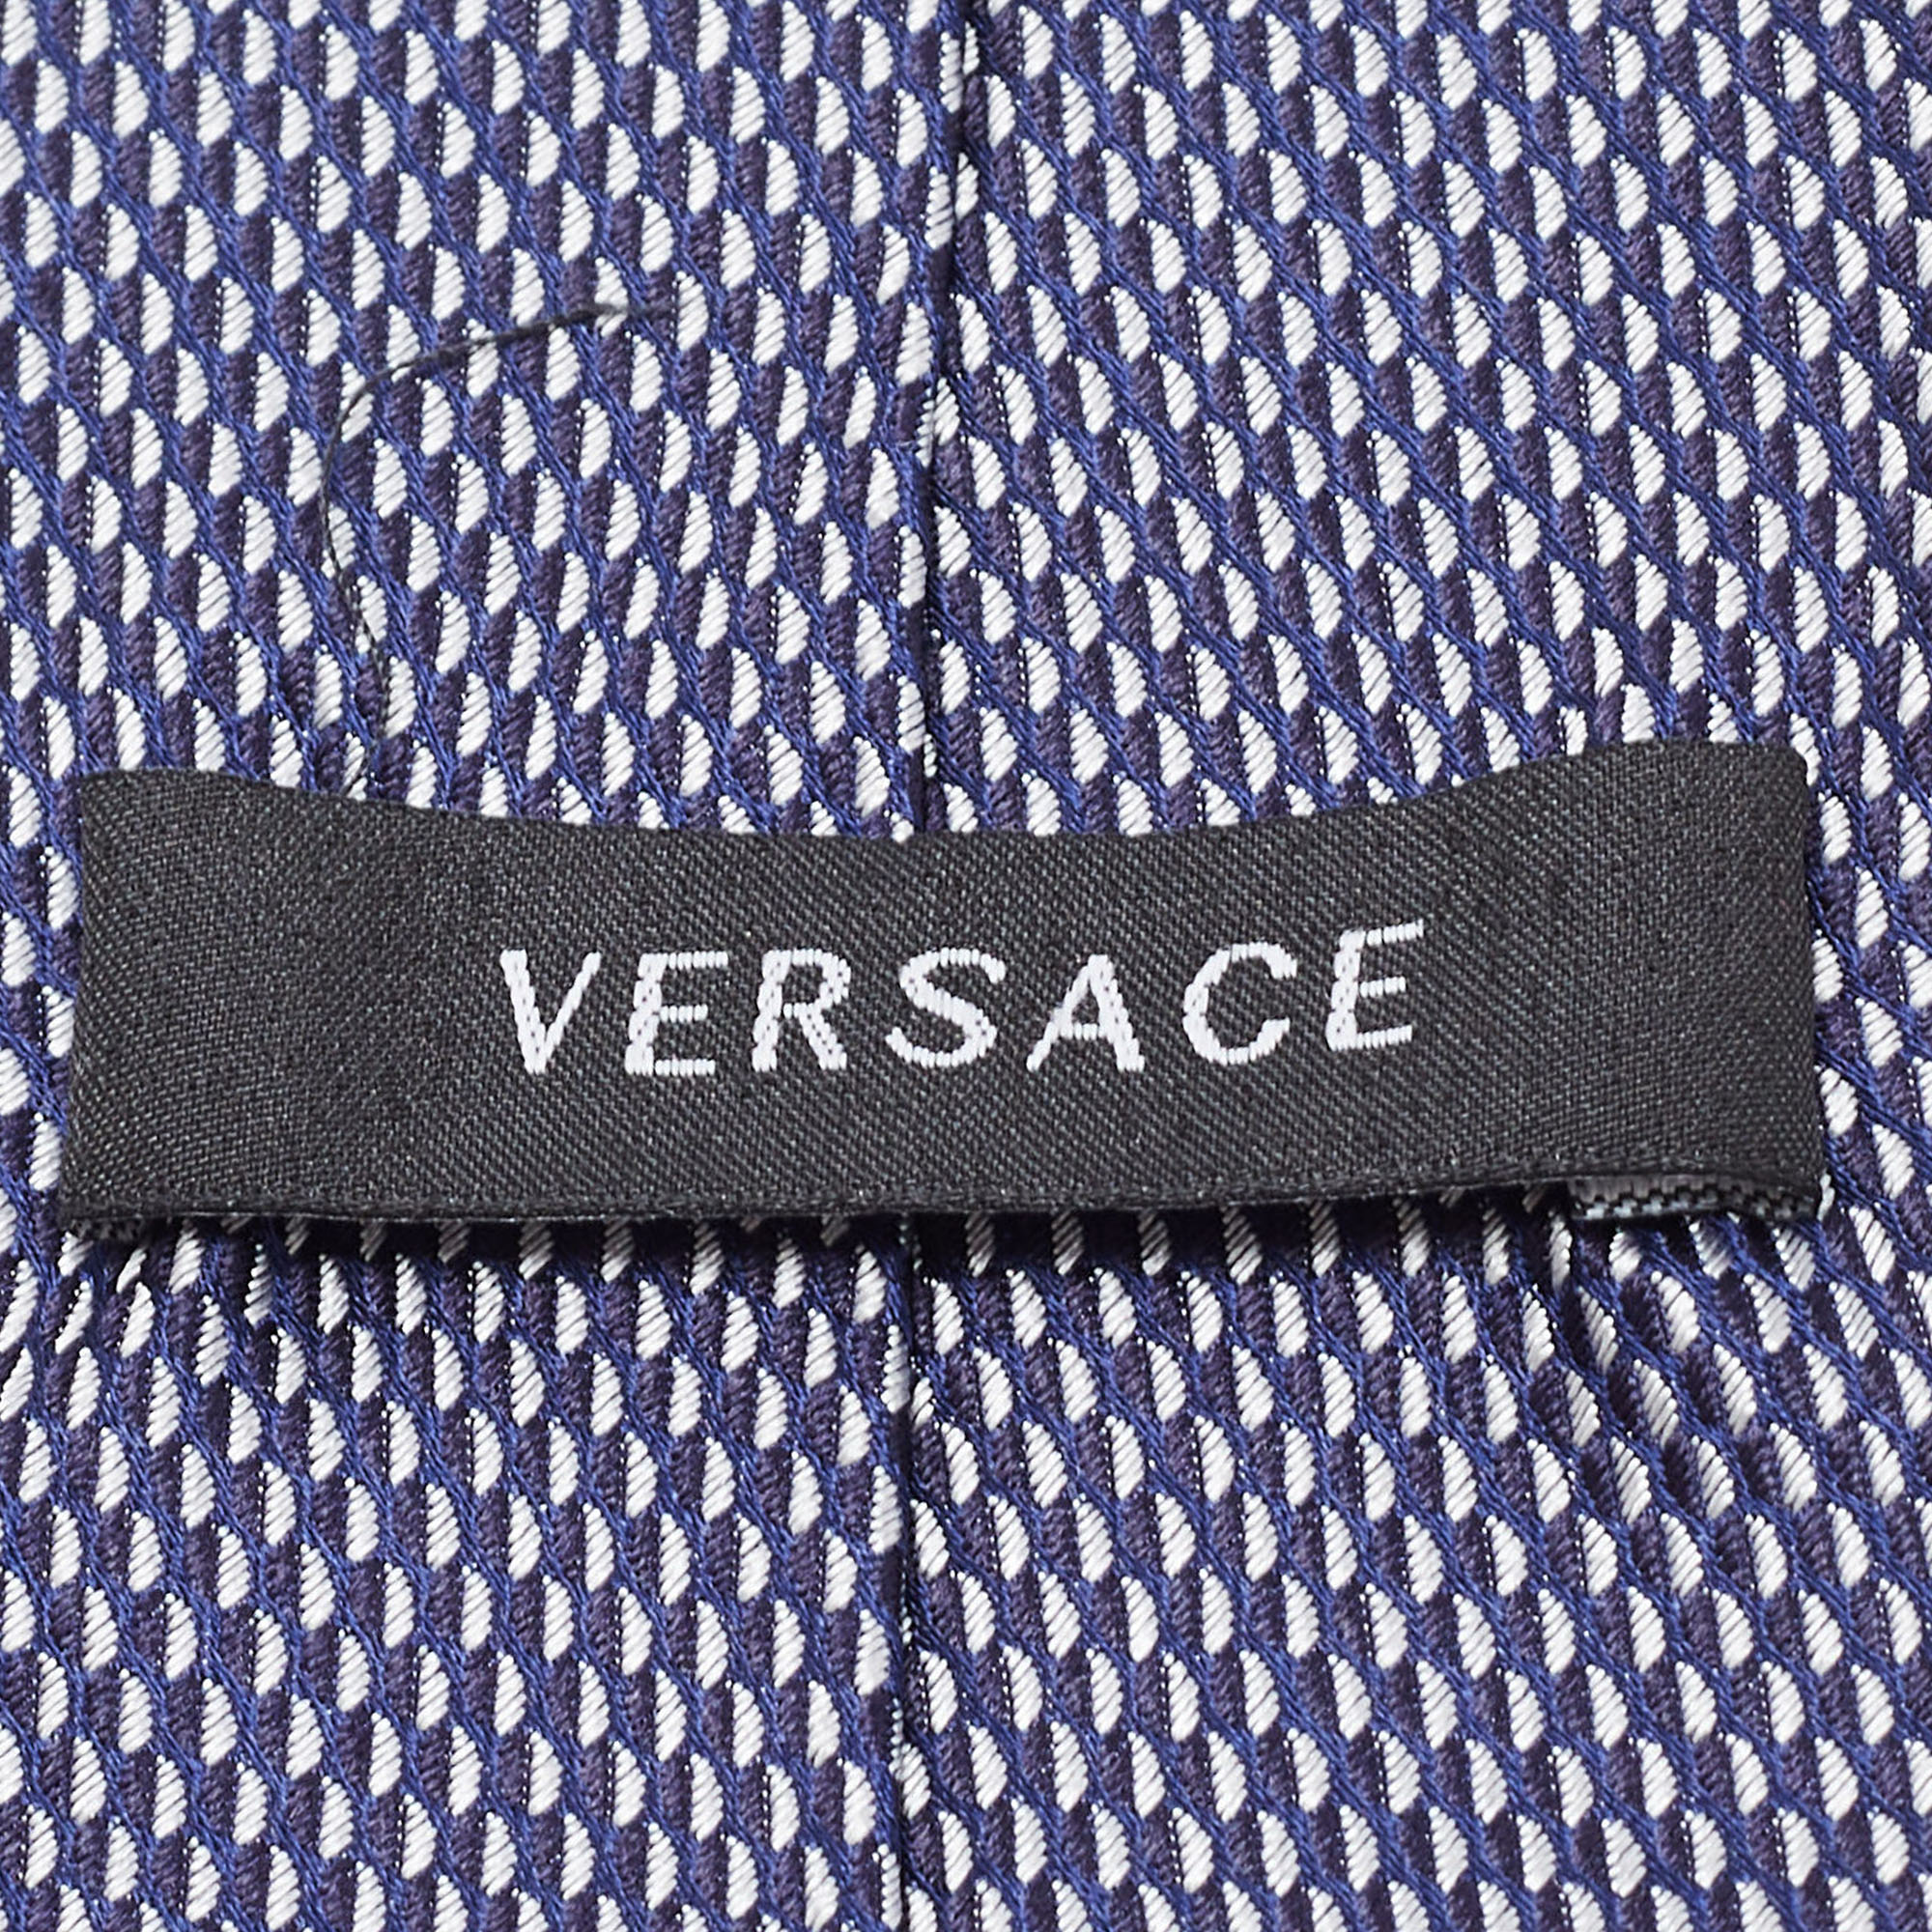 Versace Navy Blue Patterned Silk Tie